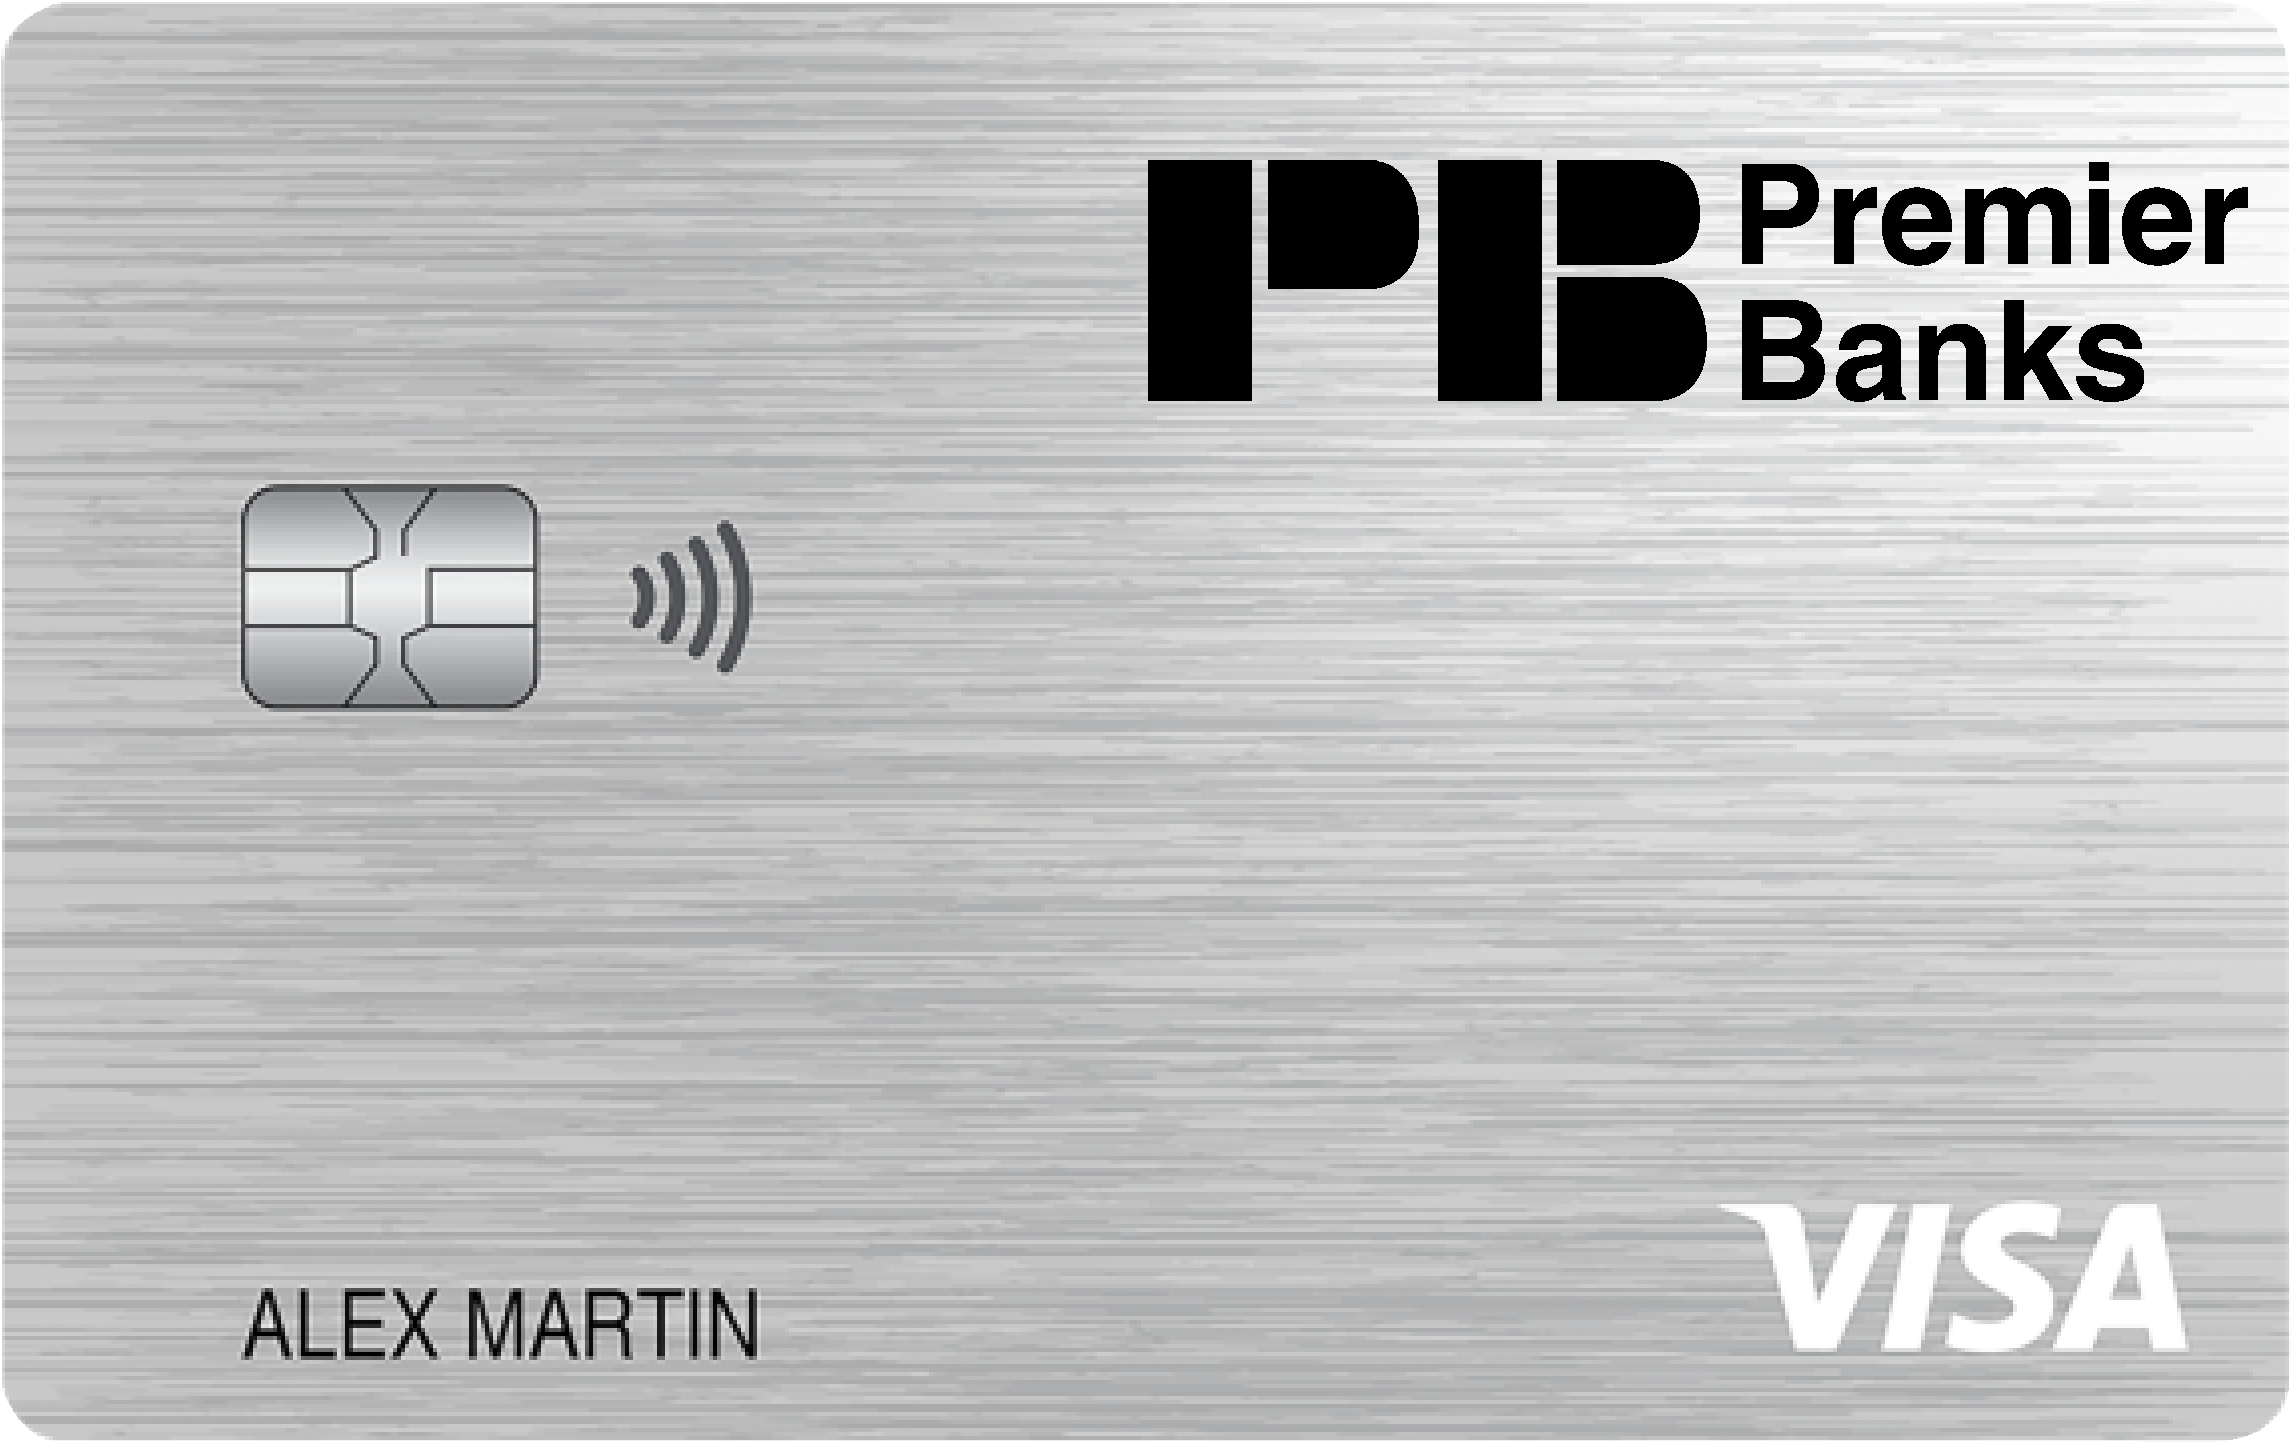 Premier Bank Platinum Card